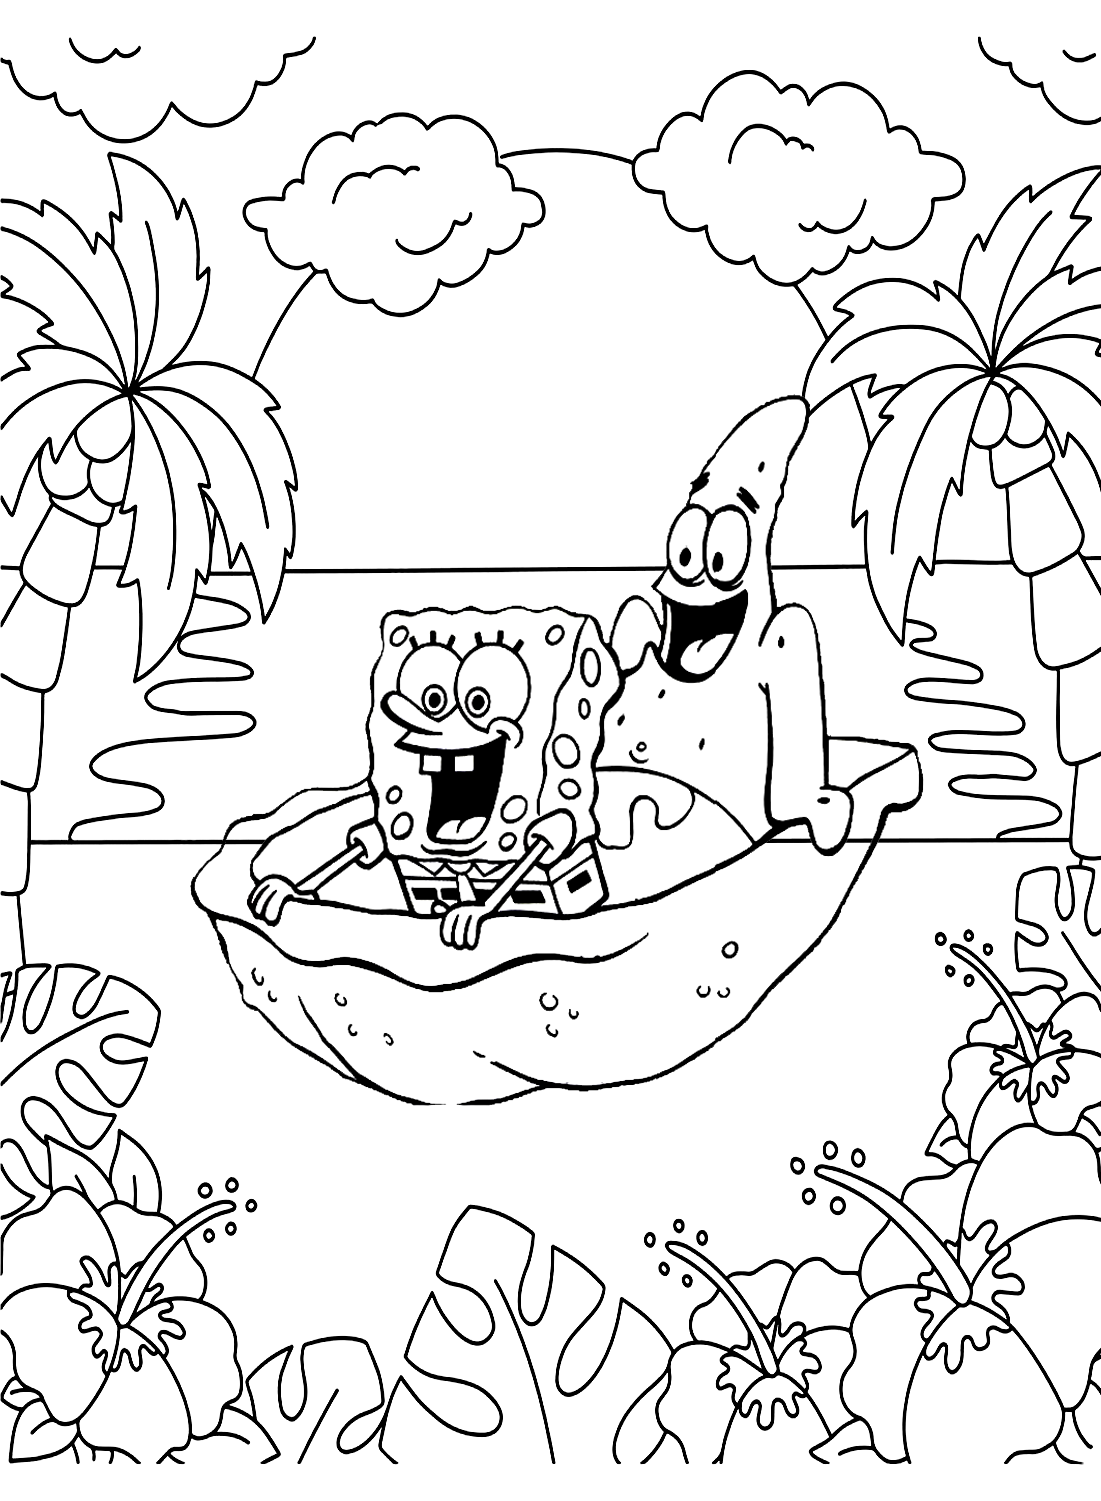 Patrick and Spongebob Color Page from Spongebob